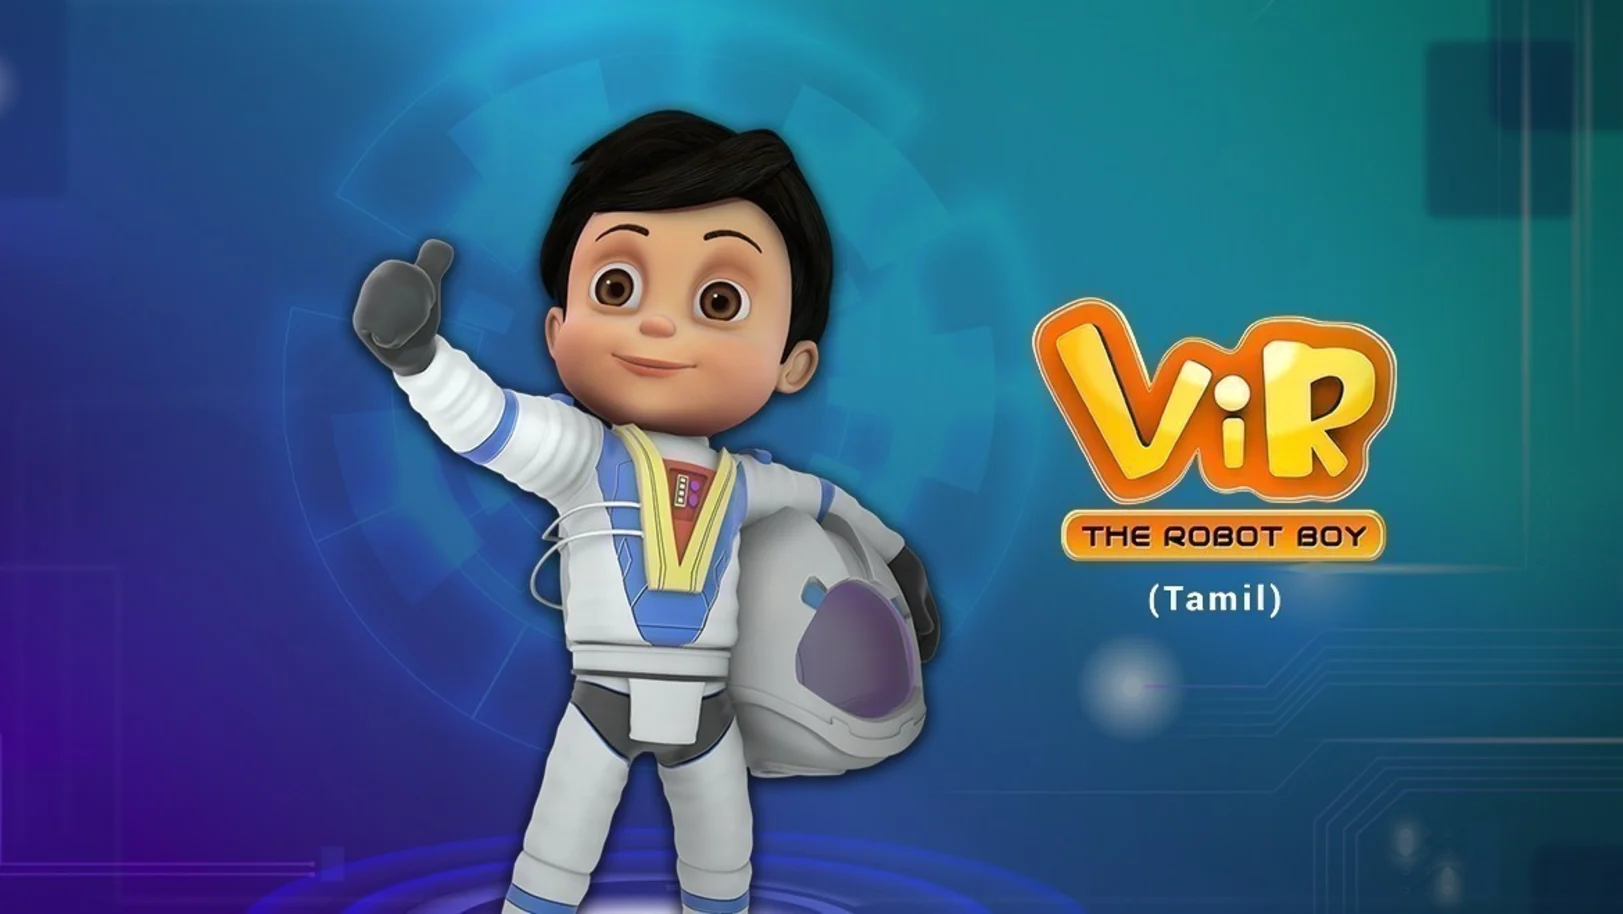 VIR - The Robot Boy - Tamil TV Show